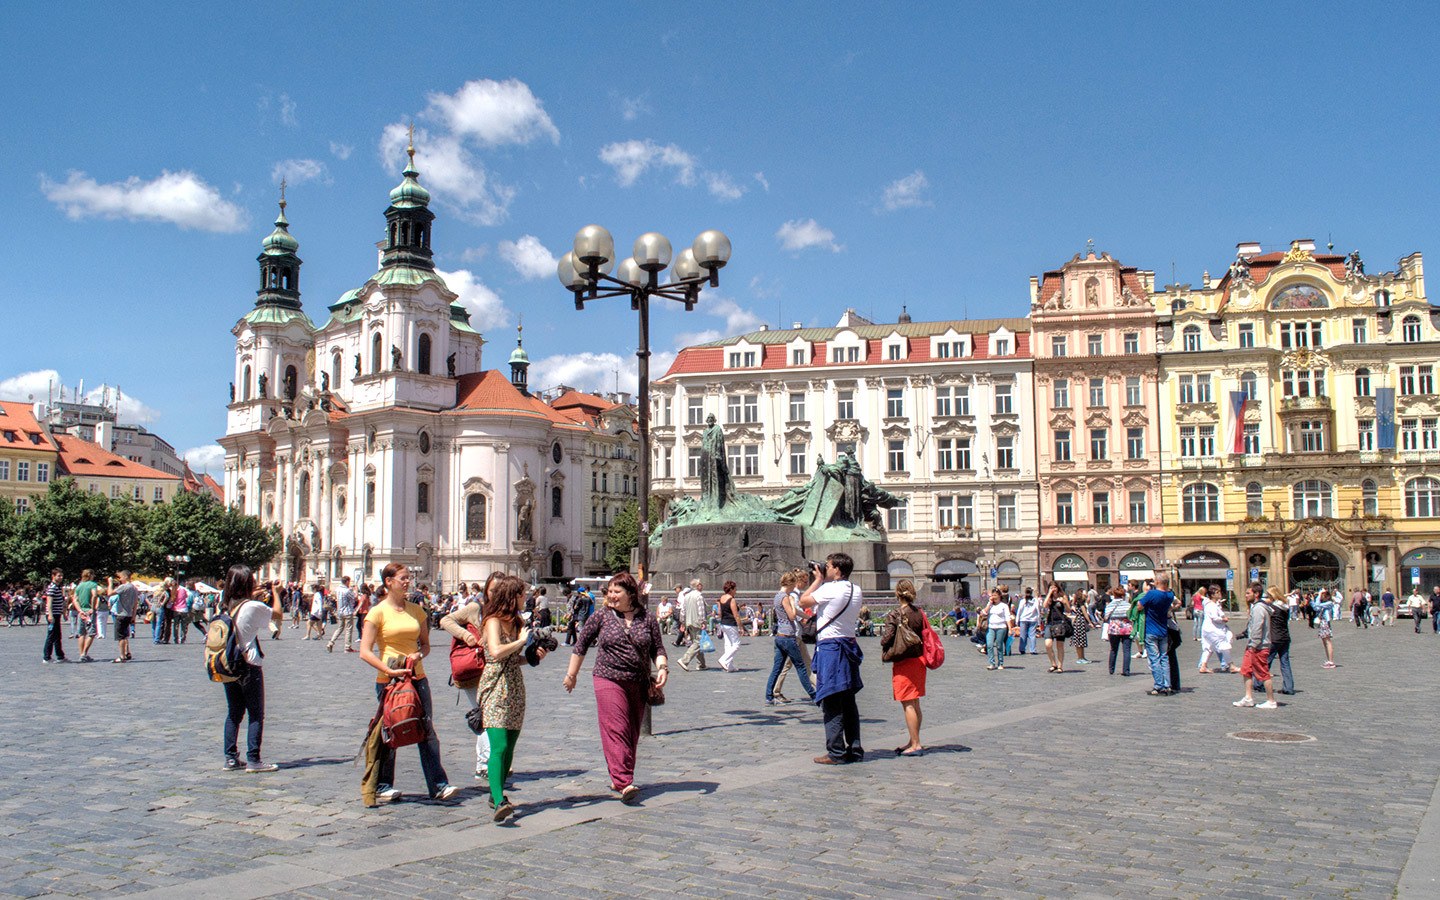 Prague's Old Town Square